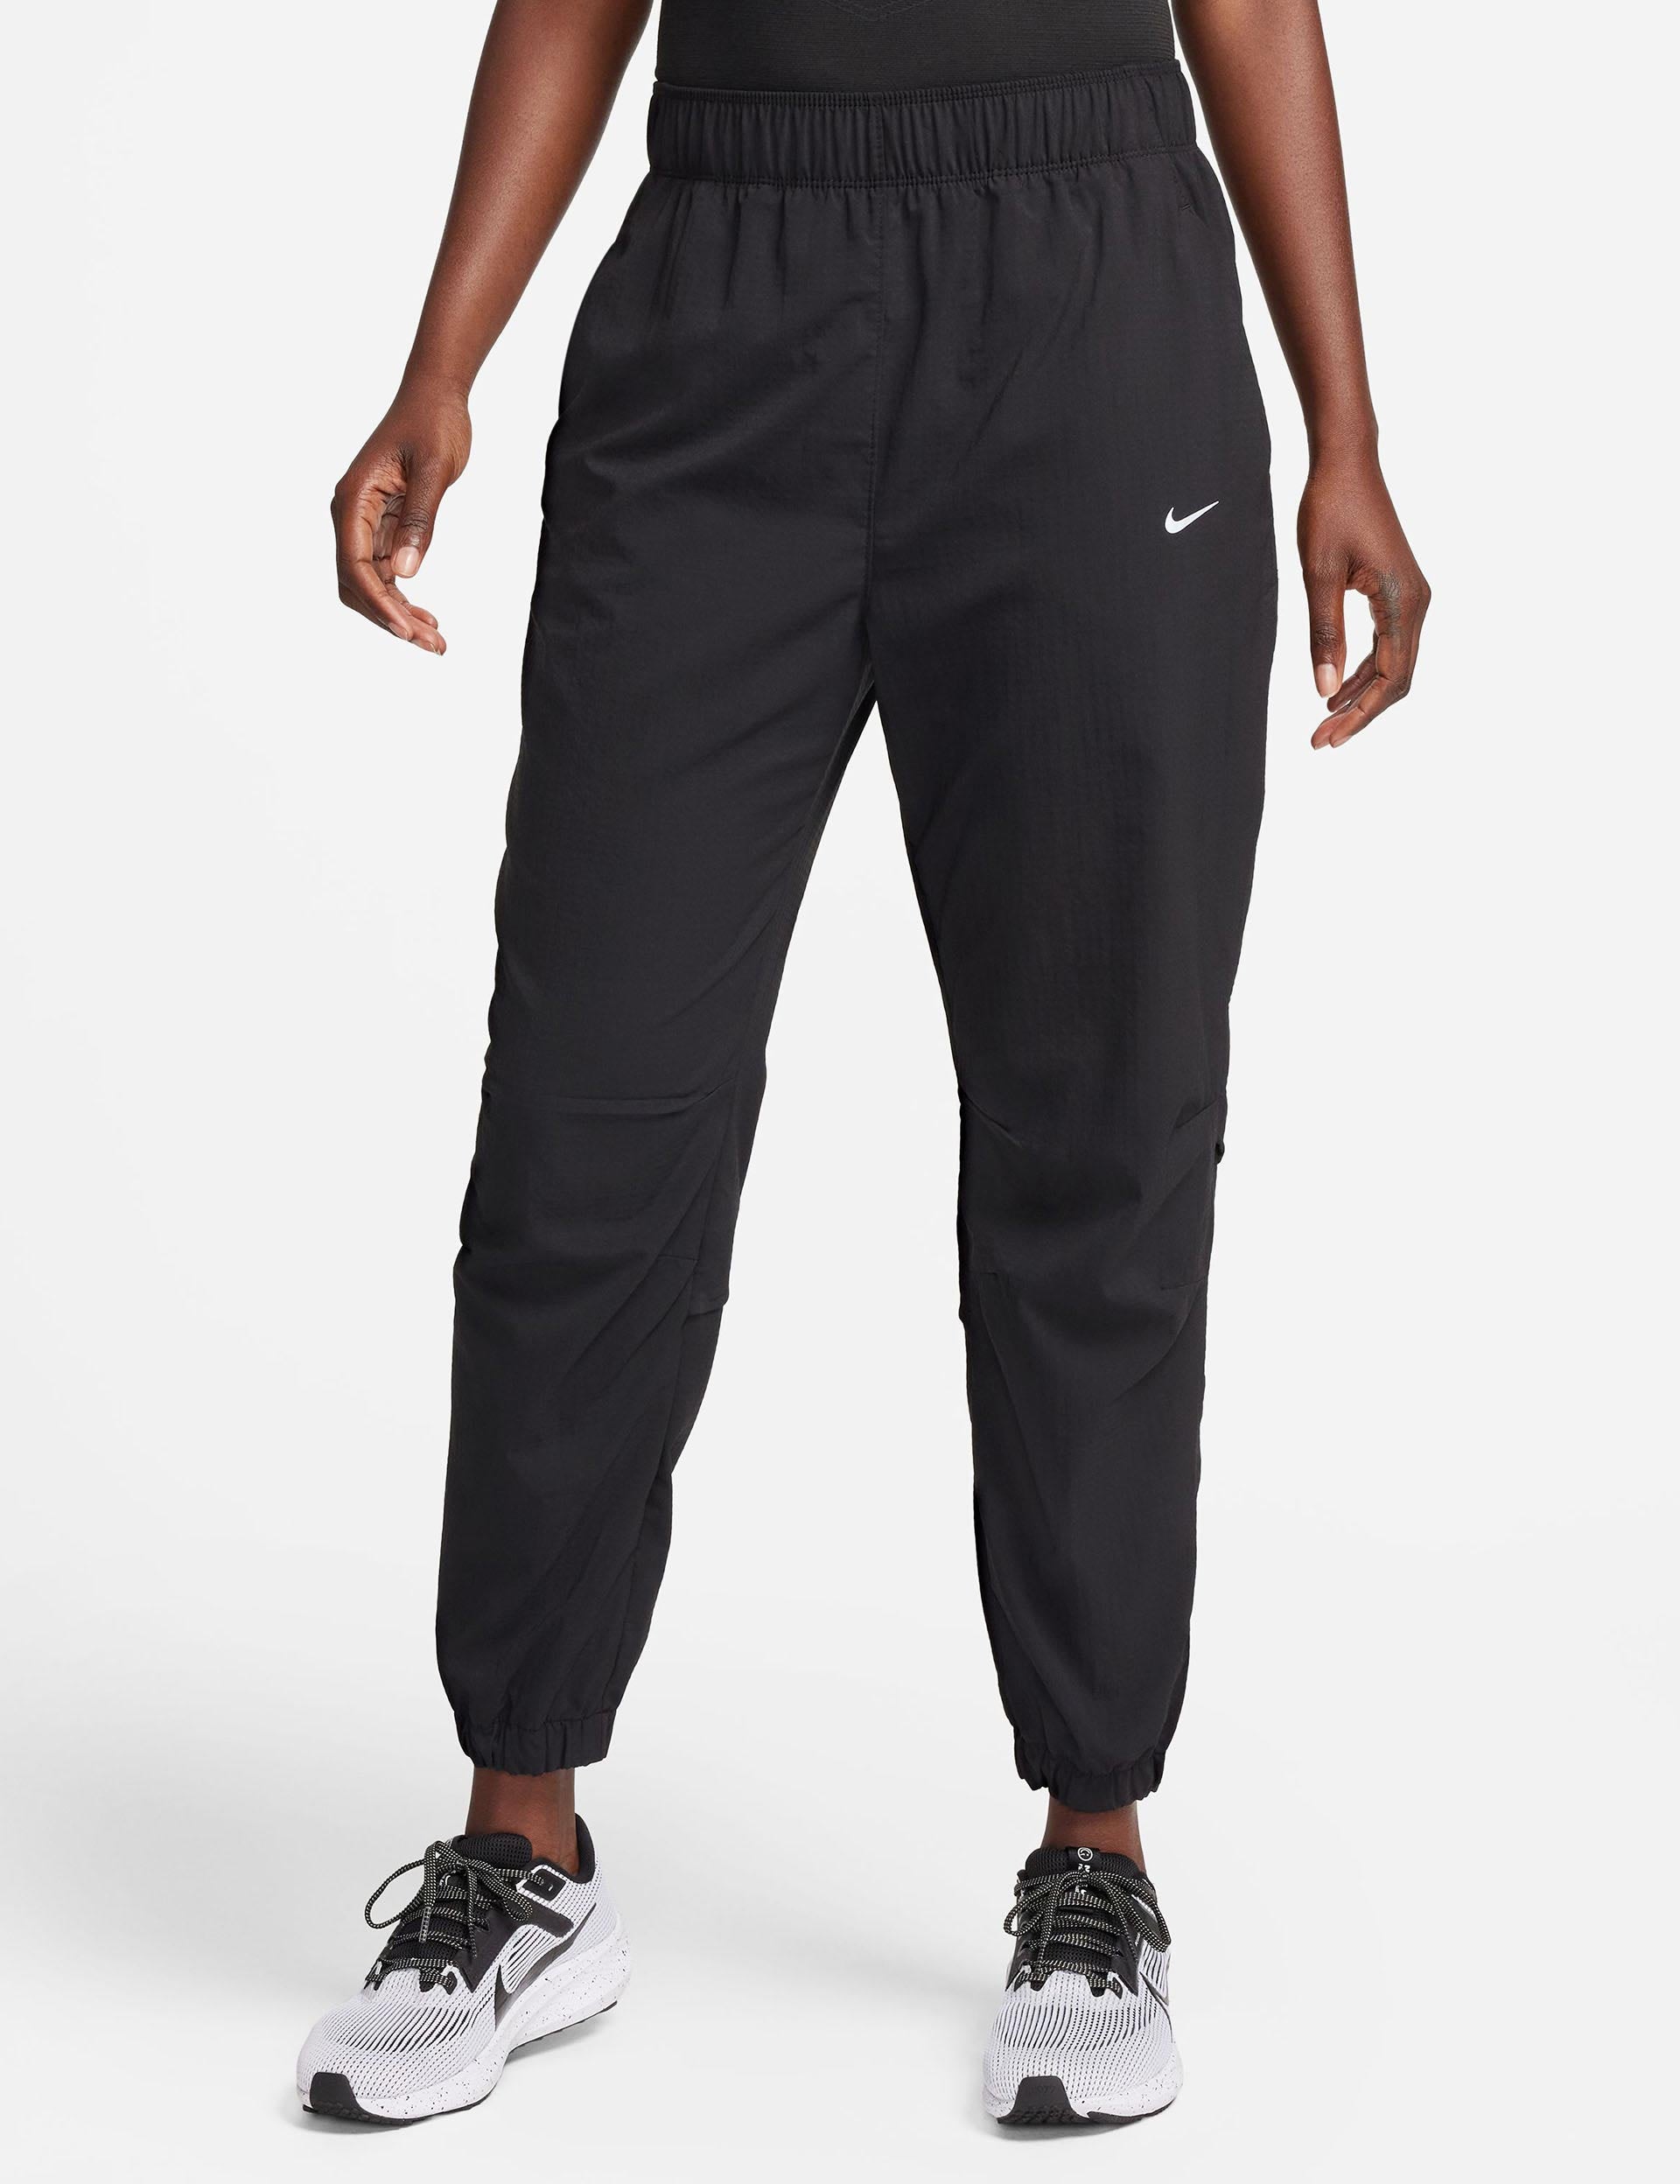 Nike Fast Women's Mid-Rise 7/8 Running Leggings with Pockets. Nike FI